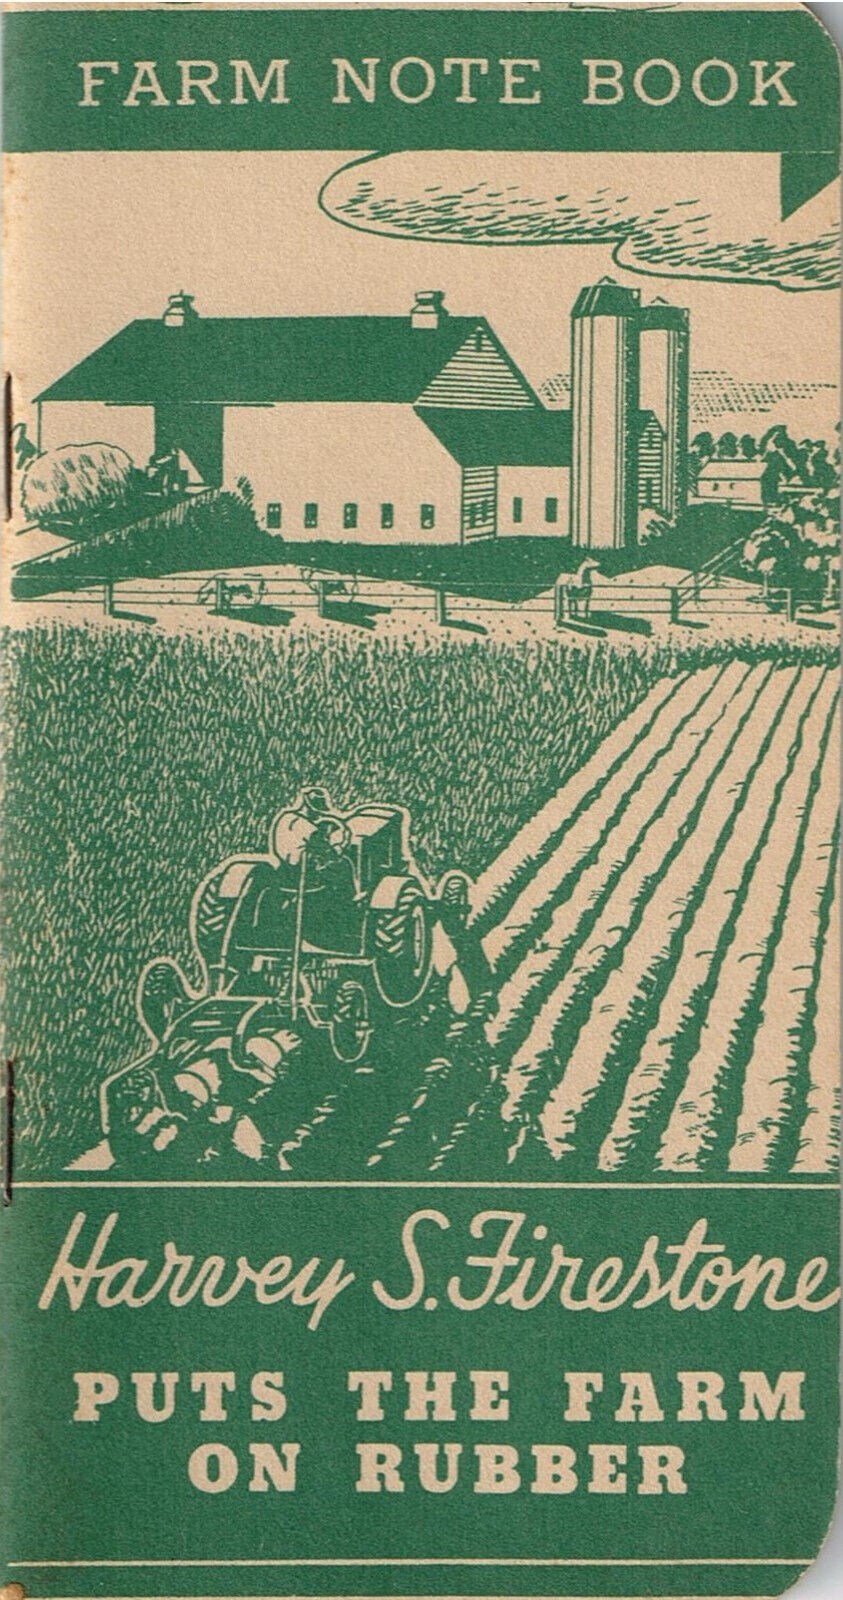 Original 1936 Harvey S. Firestone Farm Note Book Near Mint Condition